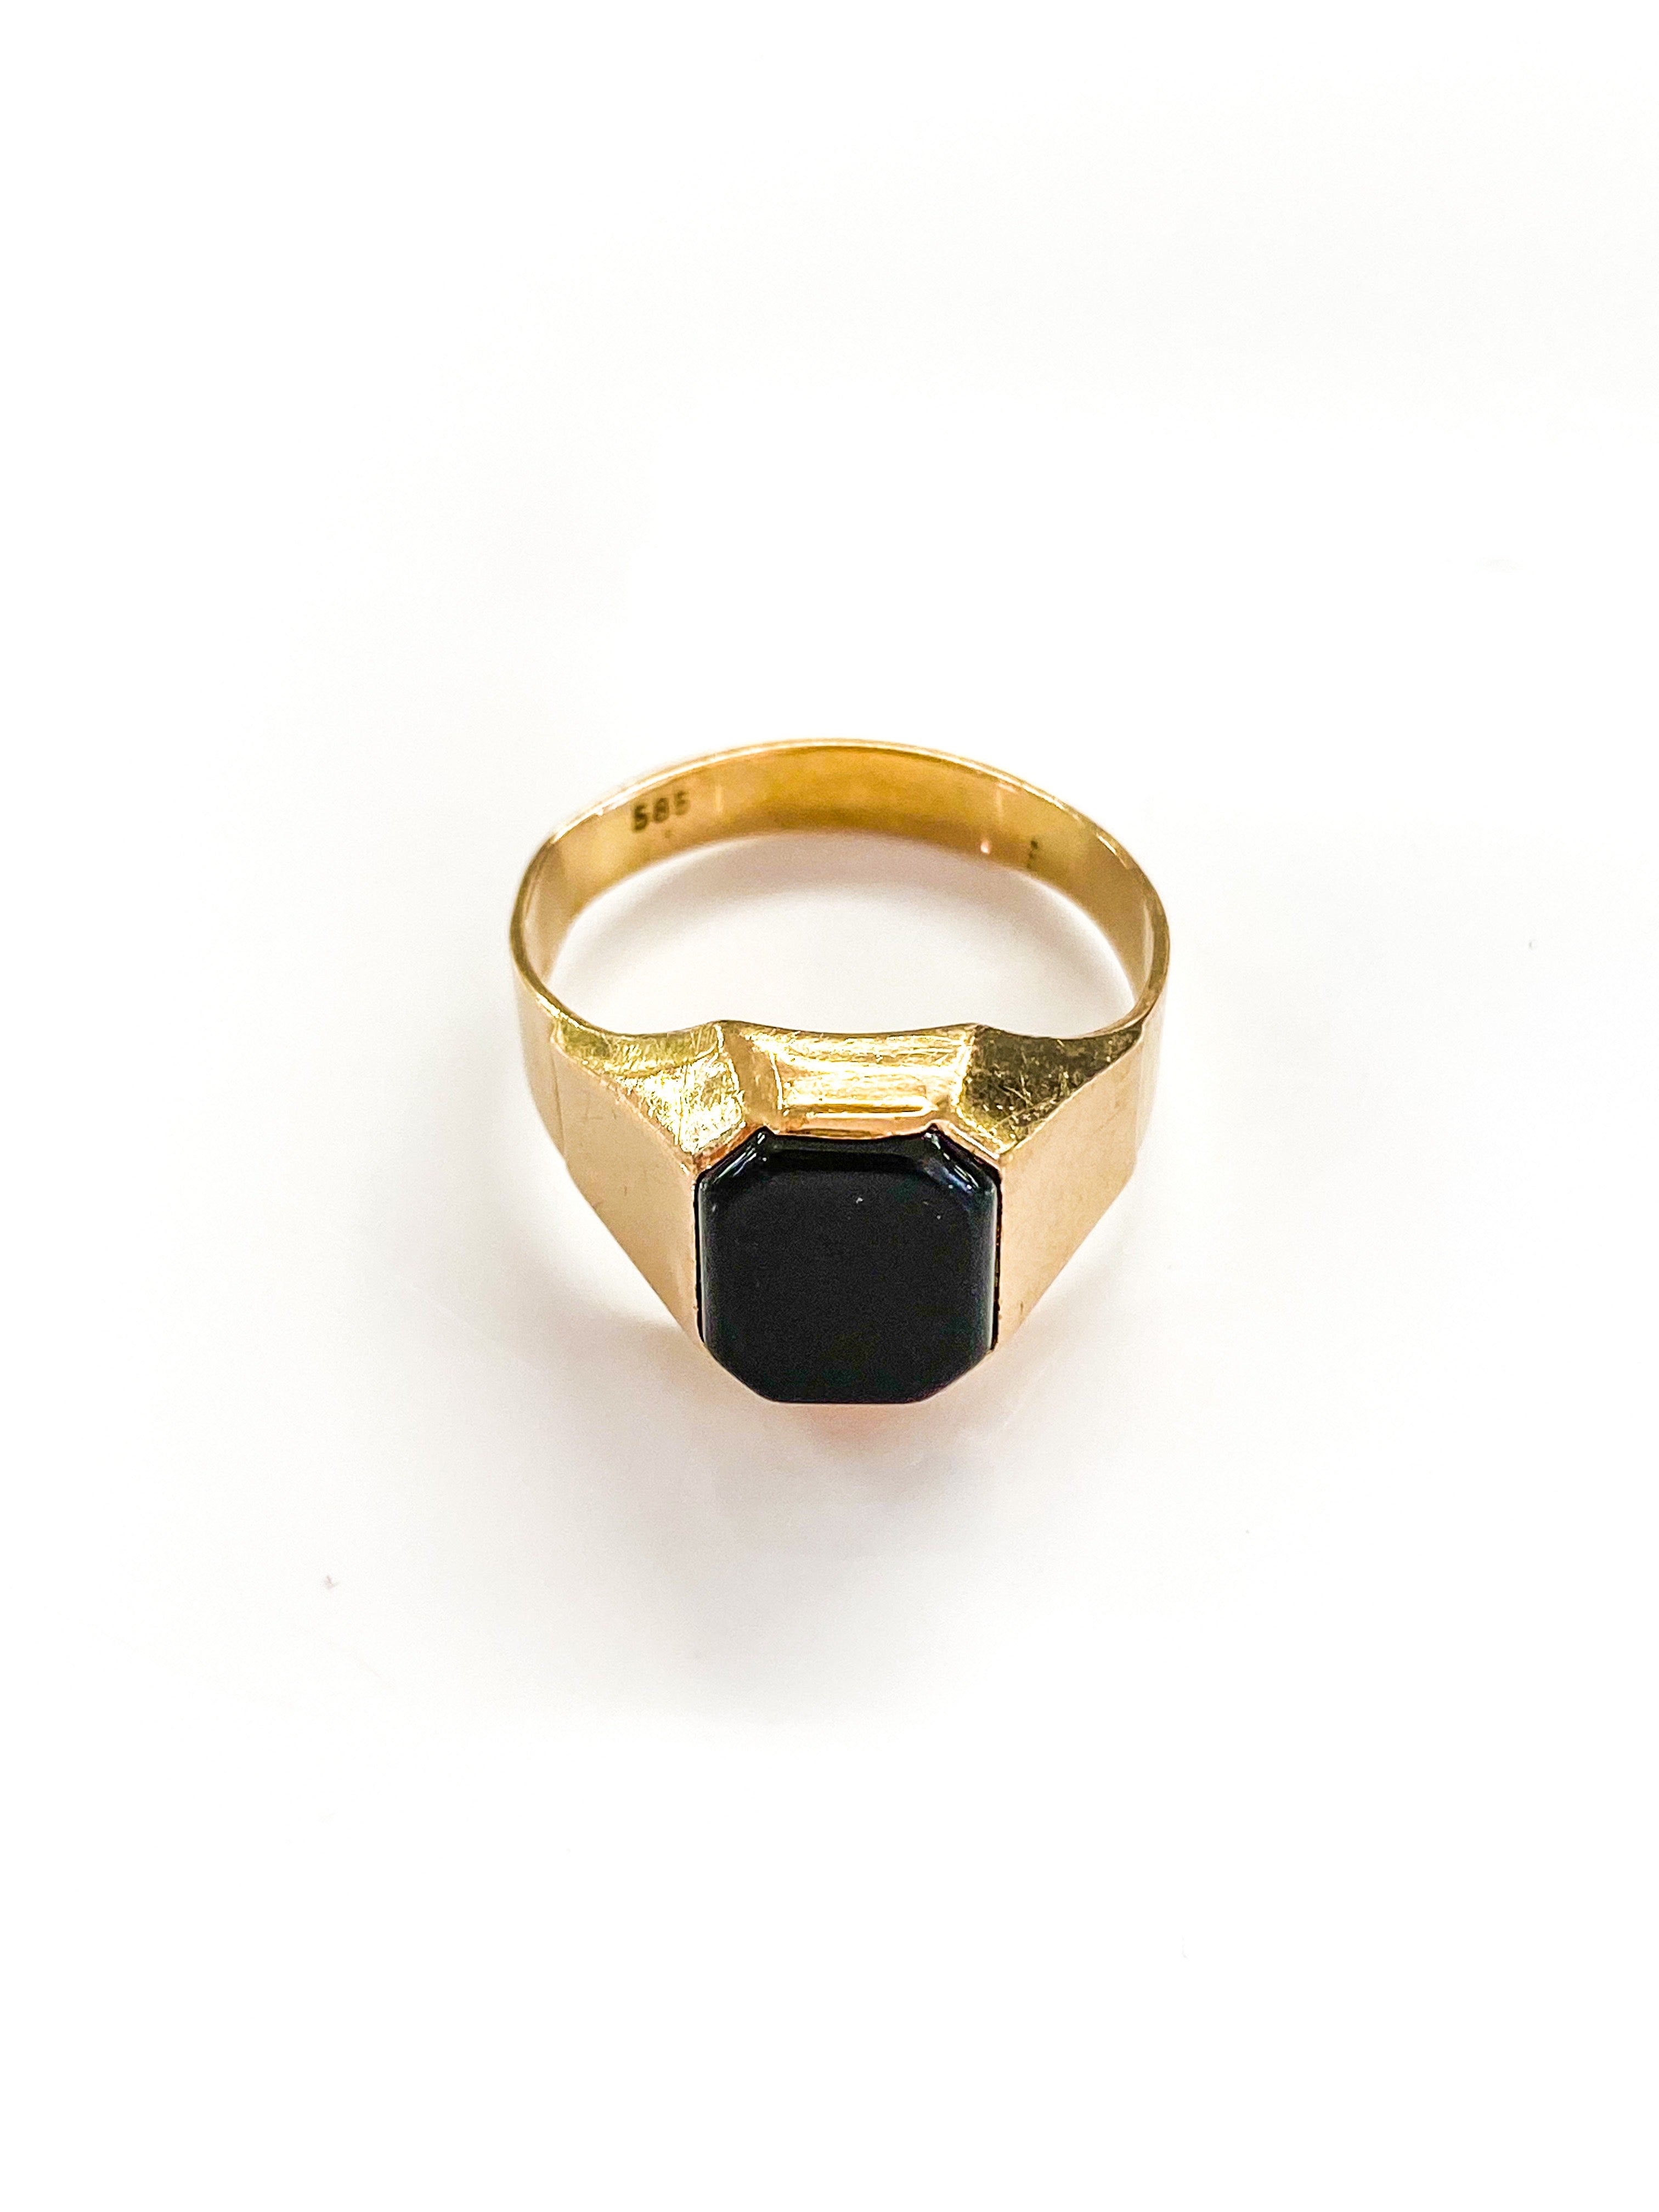 טבעת זהב אדום14 קארט עם אבן אוניקס מלבנית